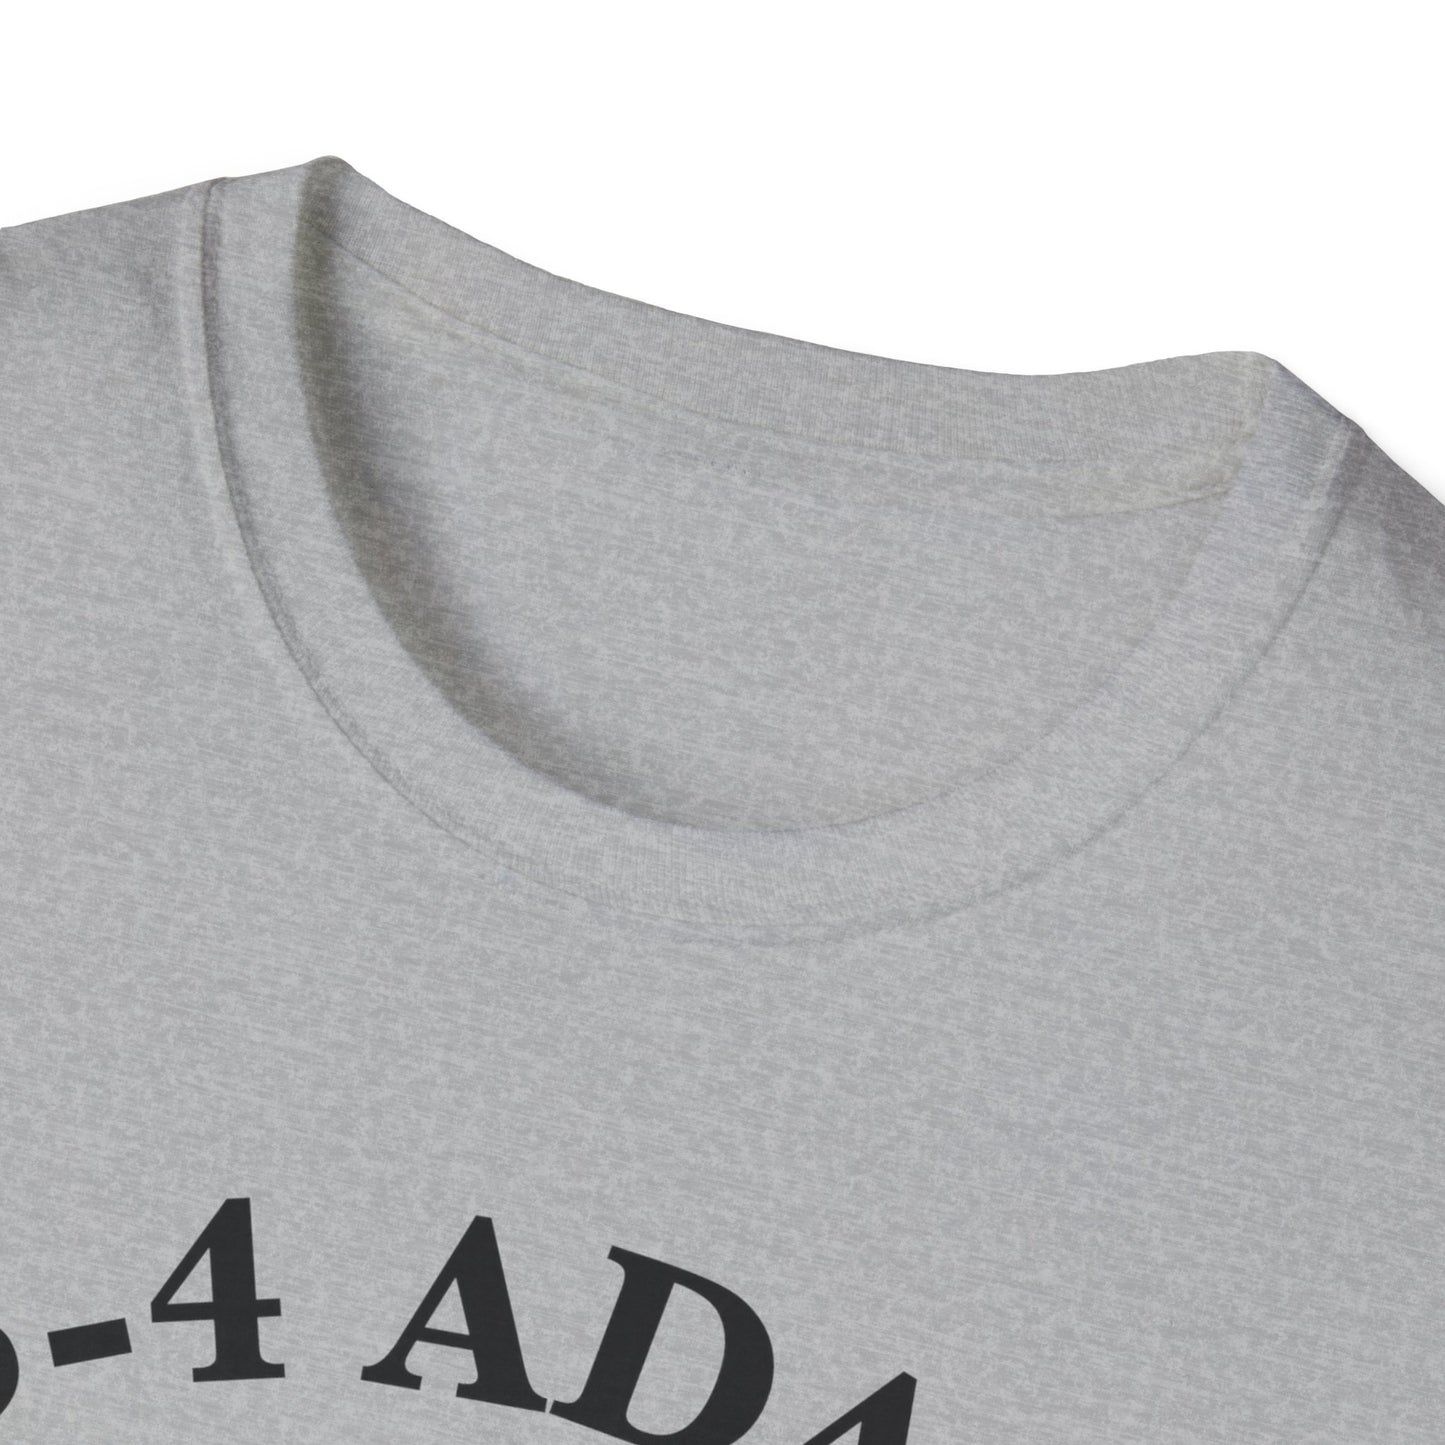 3-4 ADAR Battalion T Shirt Marshall Design Unisex Softstyle T-Shirt